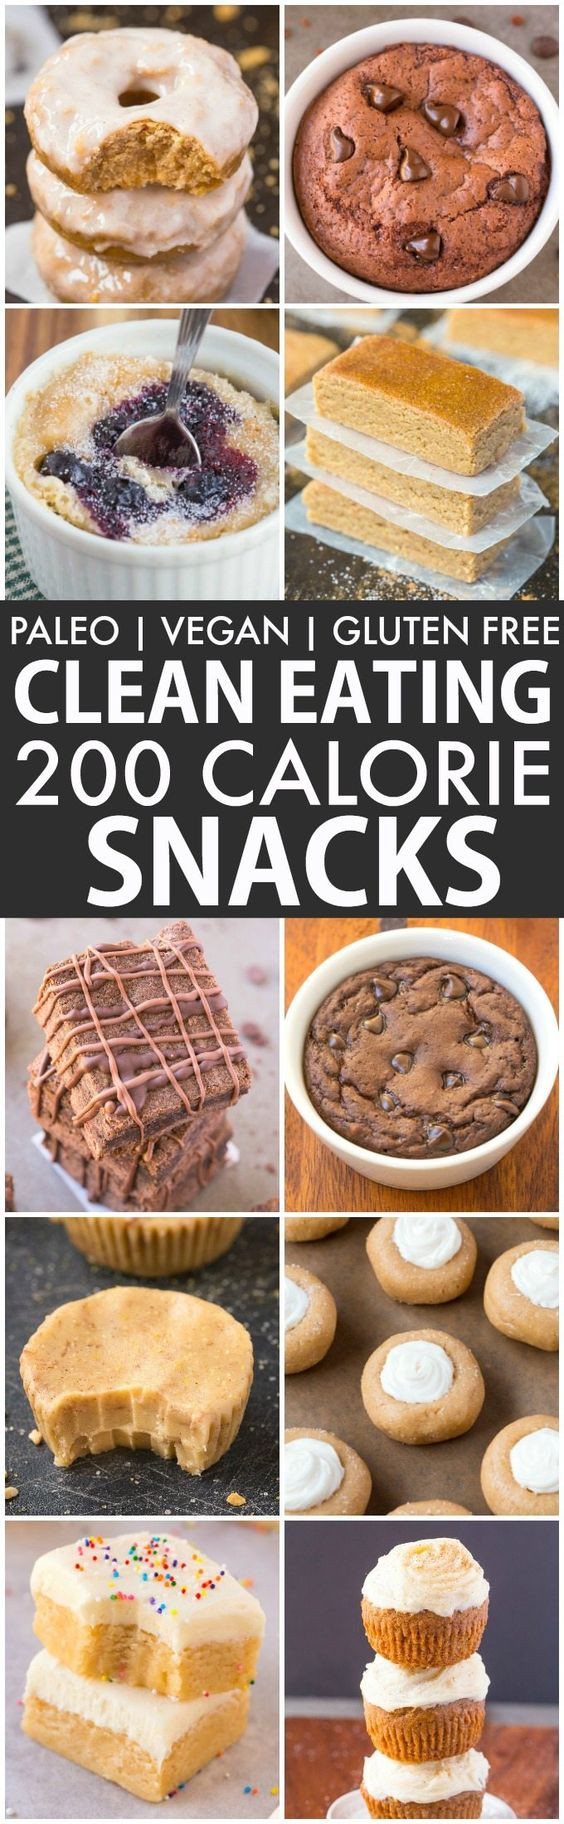 Healthy 200 Calorie Snacks
 Pinterest • The world’s catalog of ideas